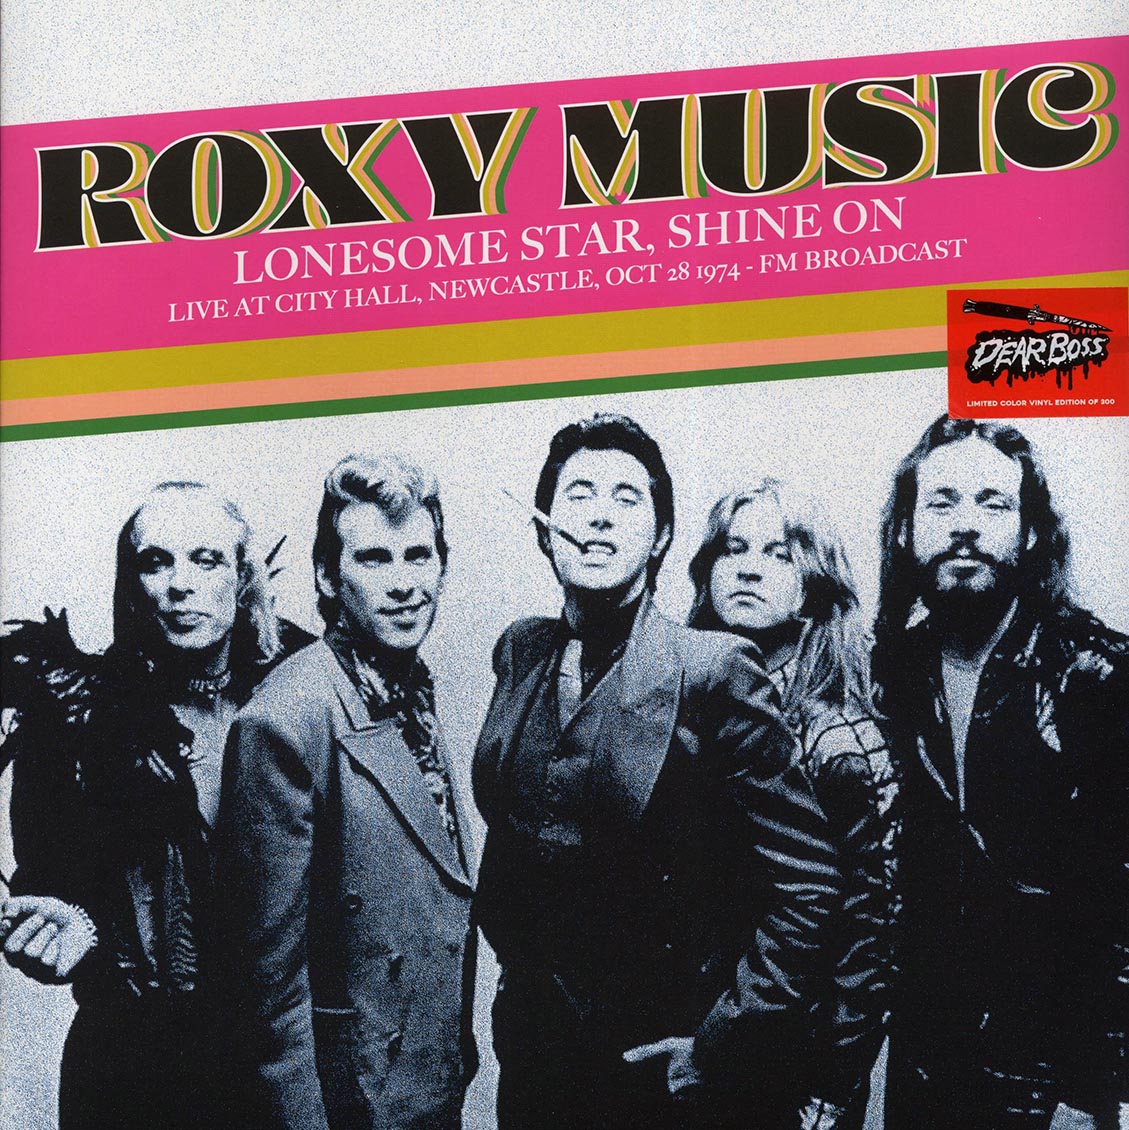 Roxy Music - Lonesome Star, Shine On: Live At City Hall, Newcastle, Oct 28 1974 (ltd. 300 copies made) (2xLP) (colored vinyl) - Vinyl LP